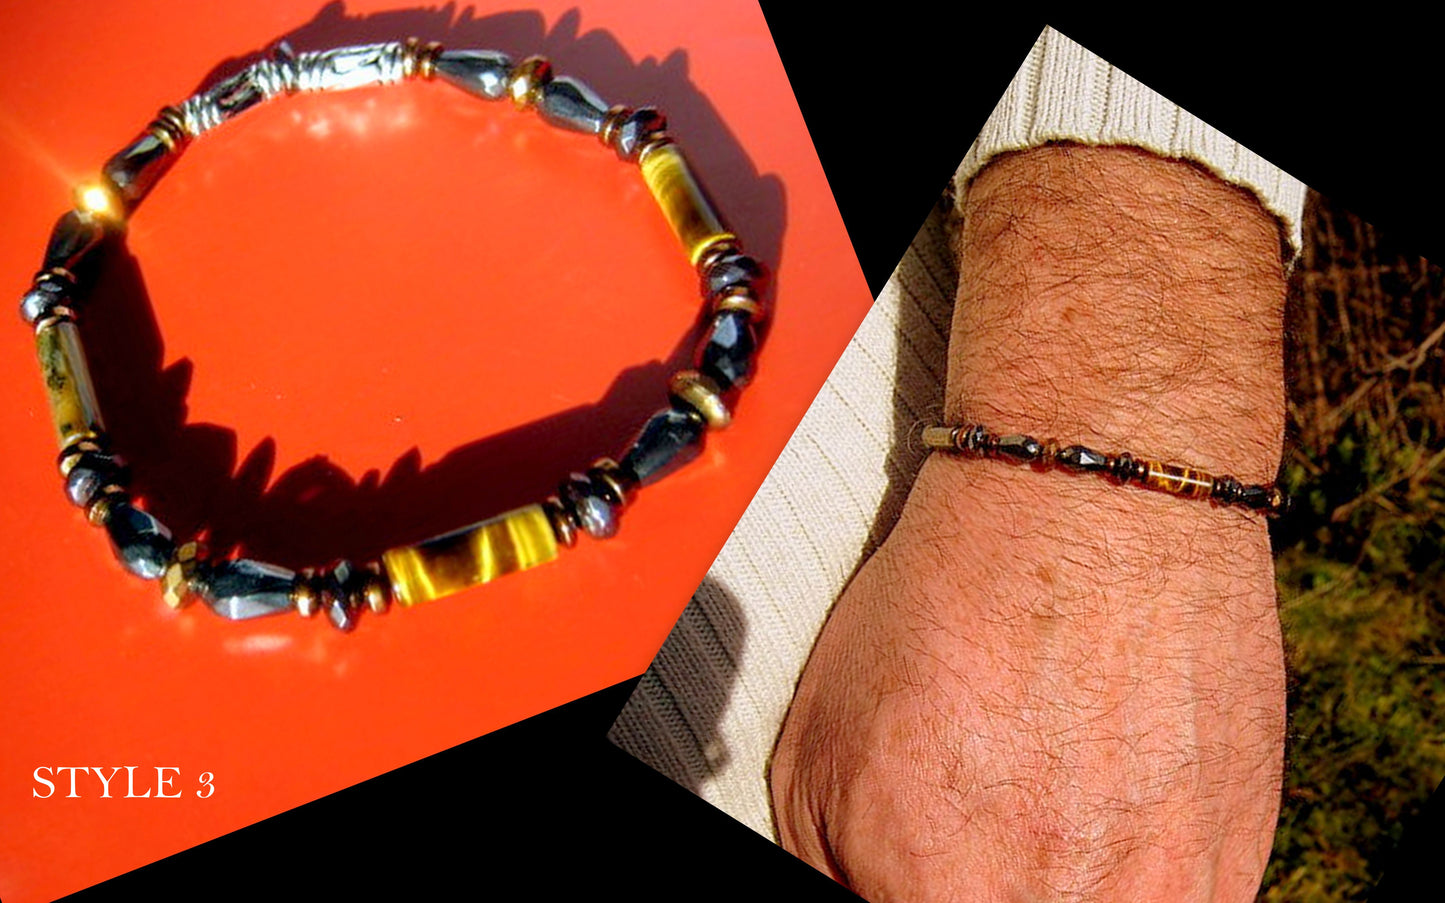 Bracelet TIGER EYE Onyx Hematite Healing protection precious stone Men handmade slim bracelet Men gift